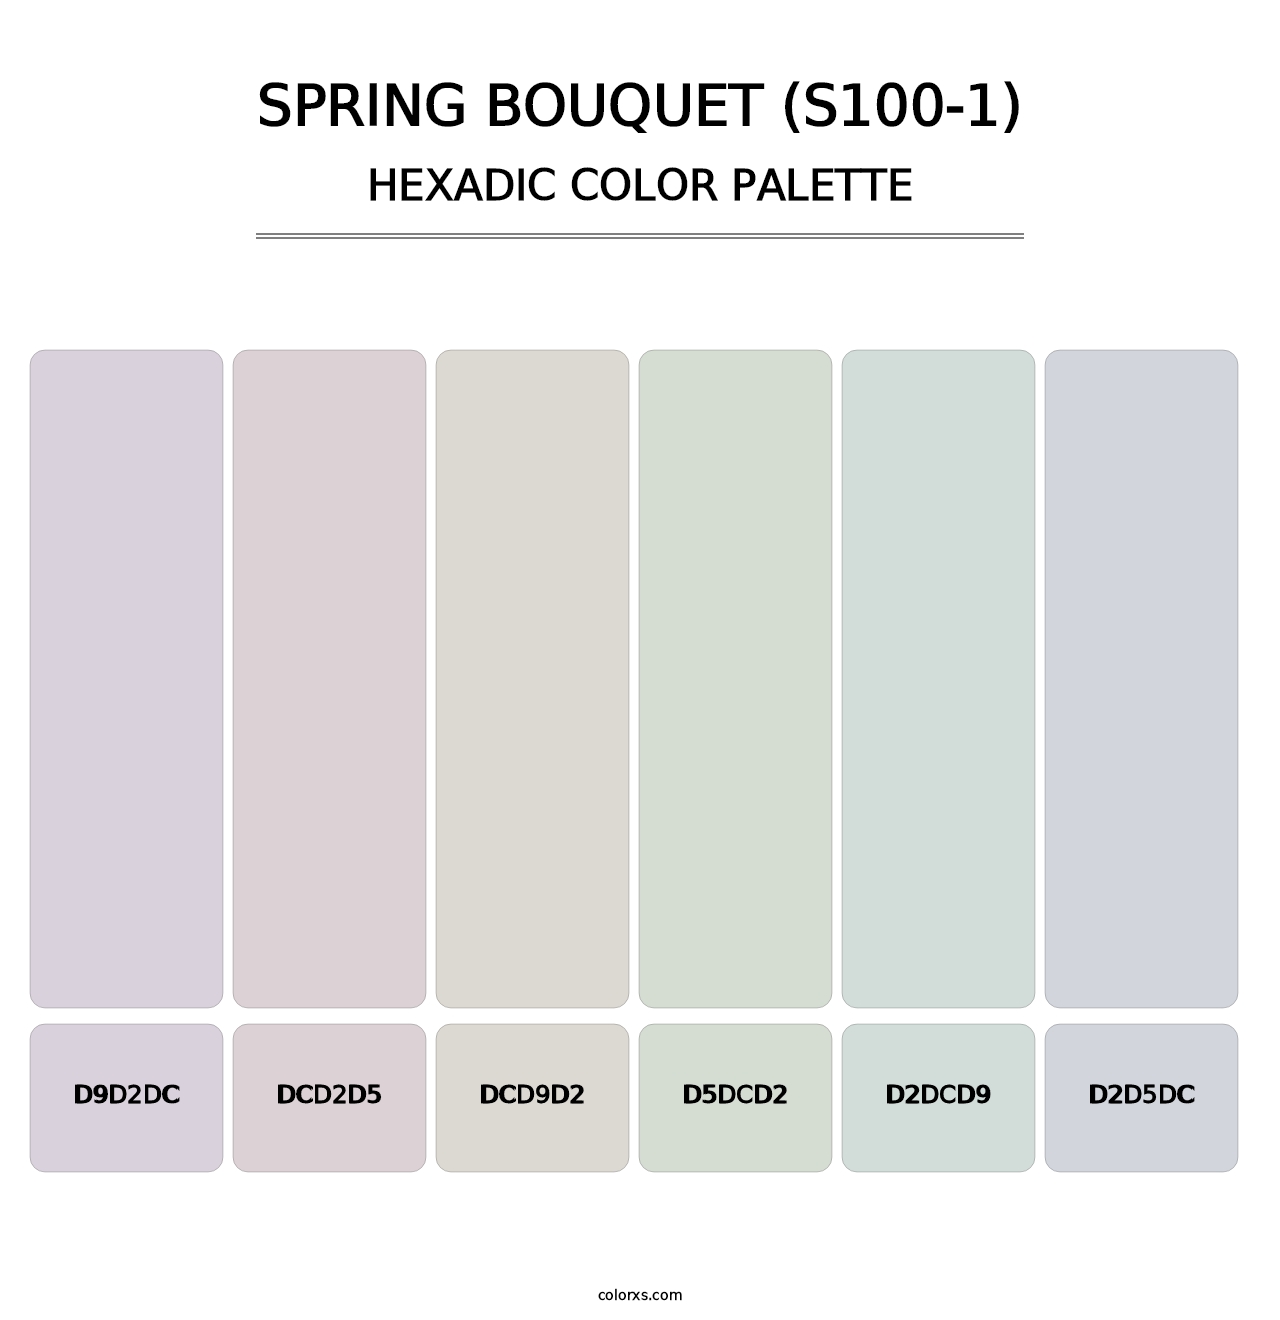 Spring Bouquet (S100-1) - Hexadic Color Palette